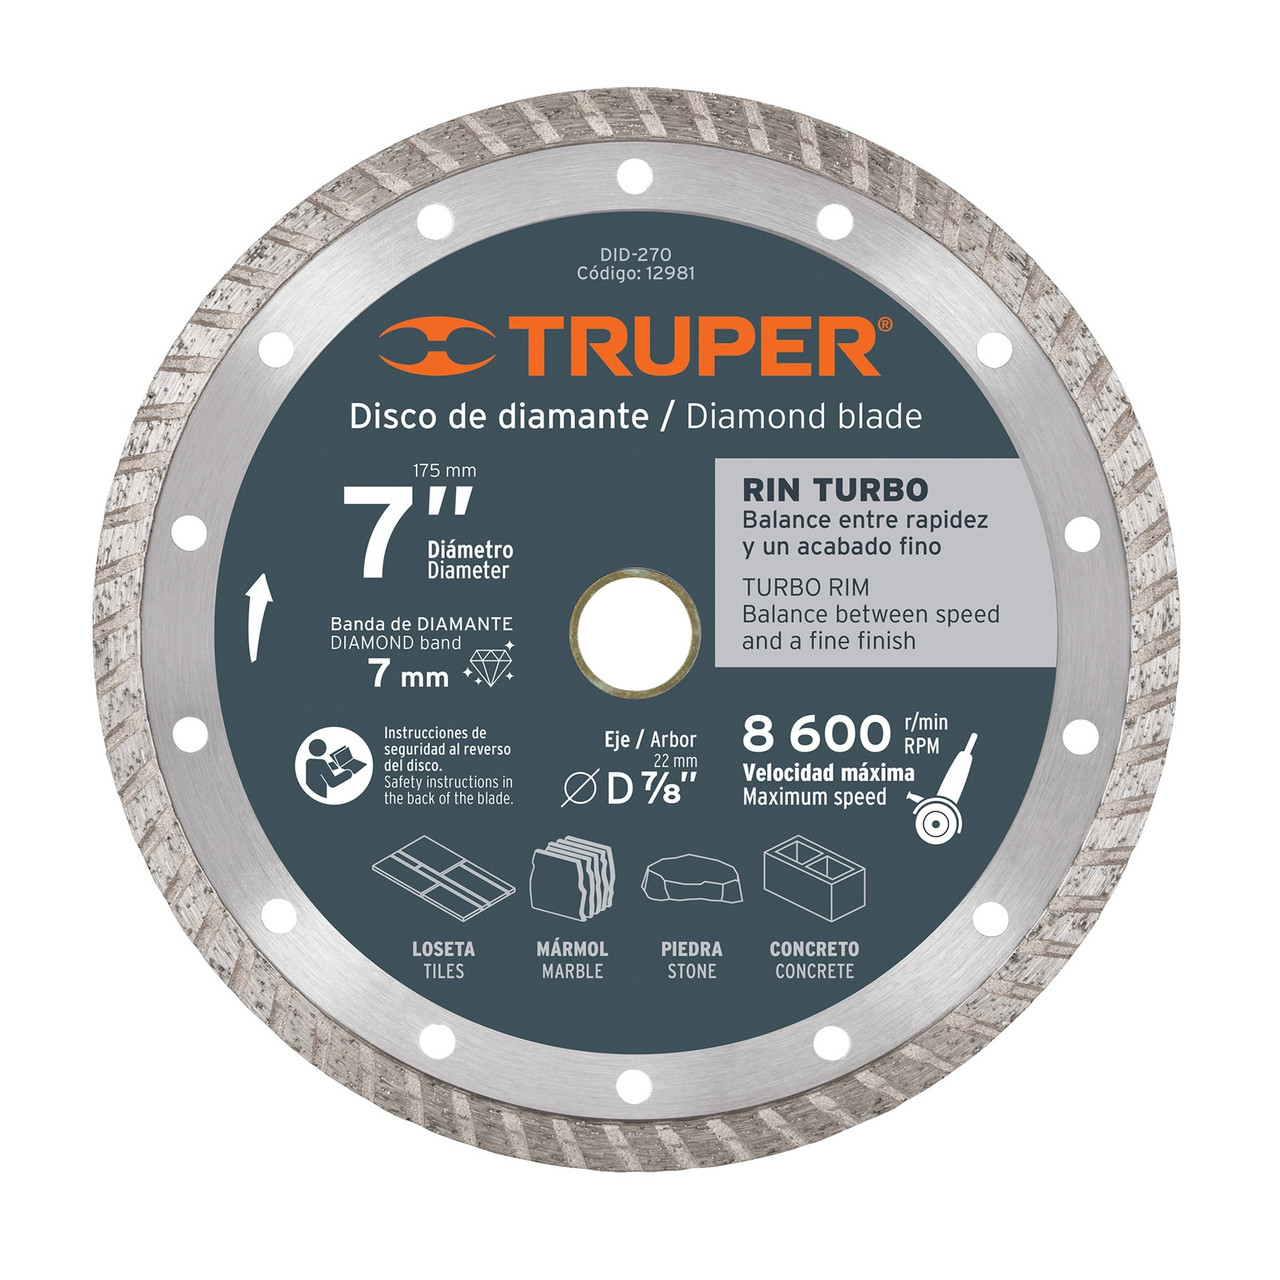 Truper 7" Turbo Rim Diamond Blade #12981